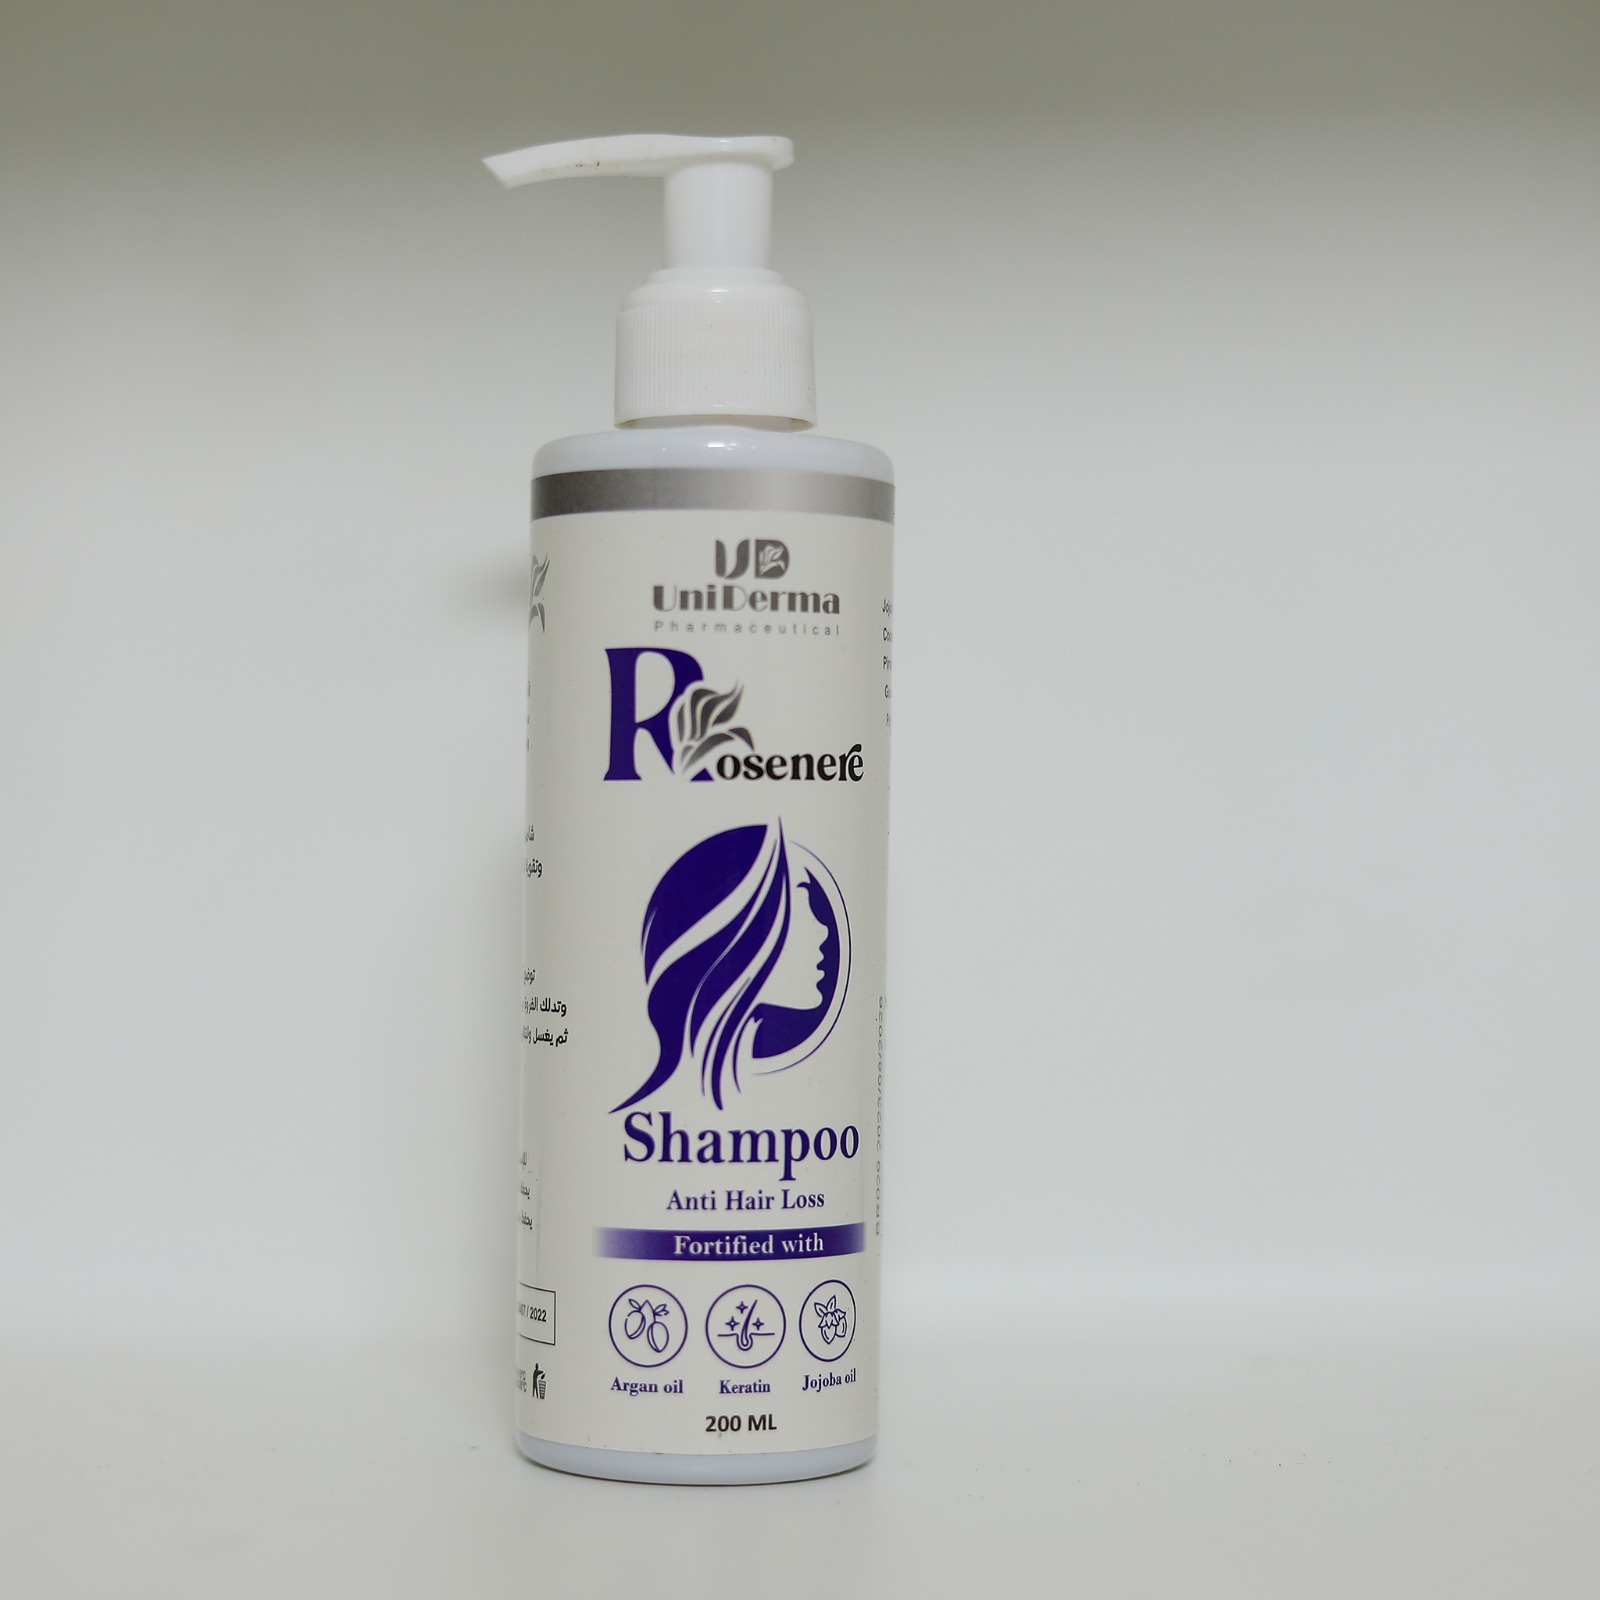 Rosenere hair serum